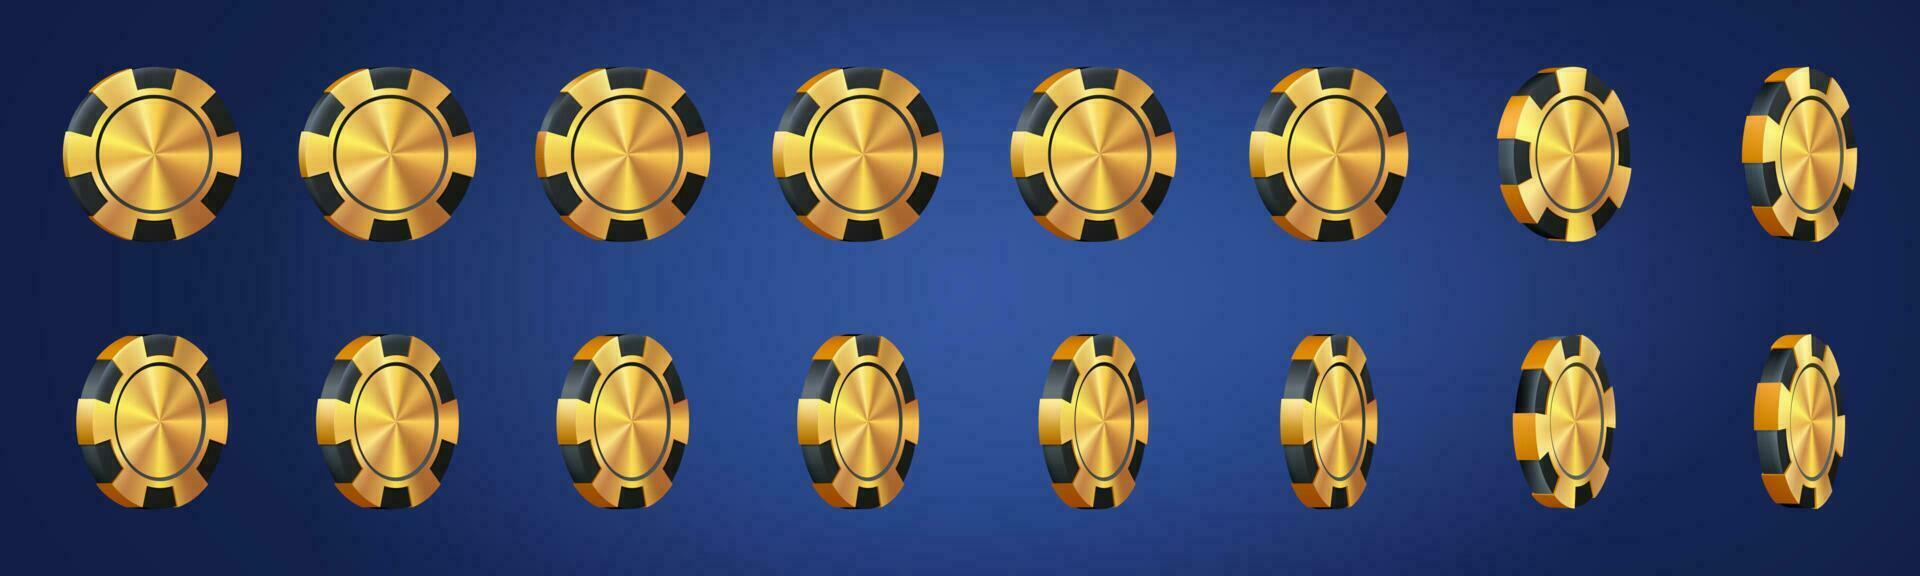 3d golden casino club poker chip rotation vector